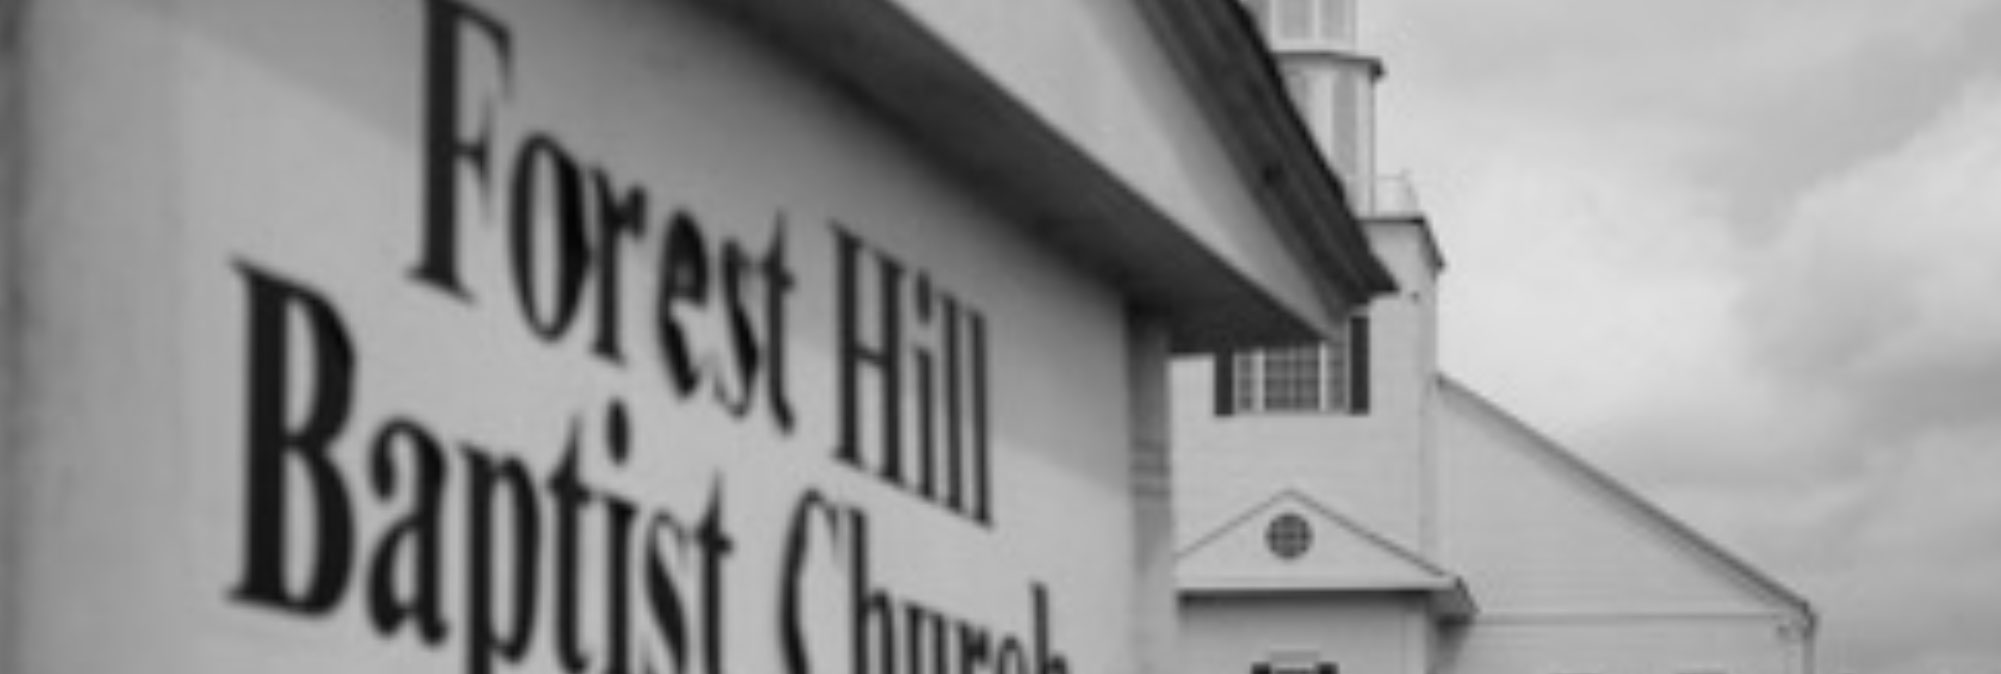 Forest Hill Baptist Church